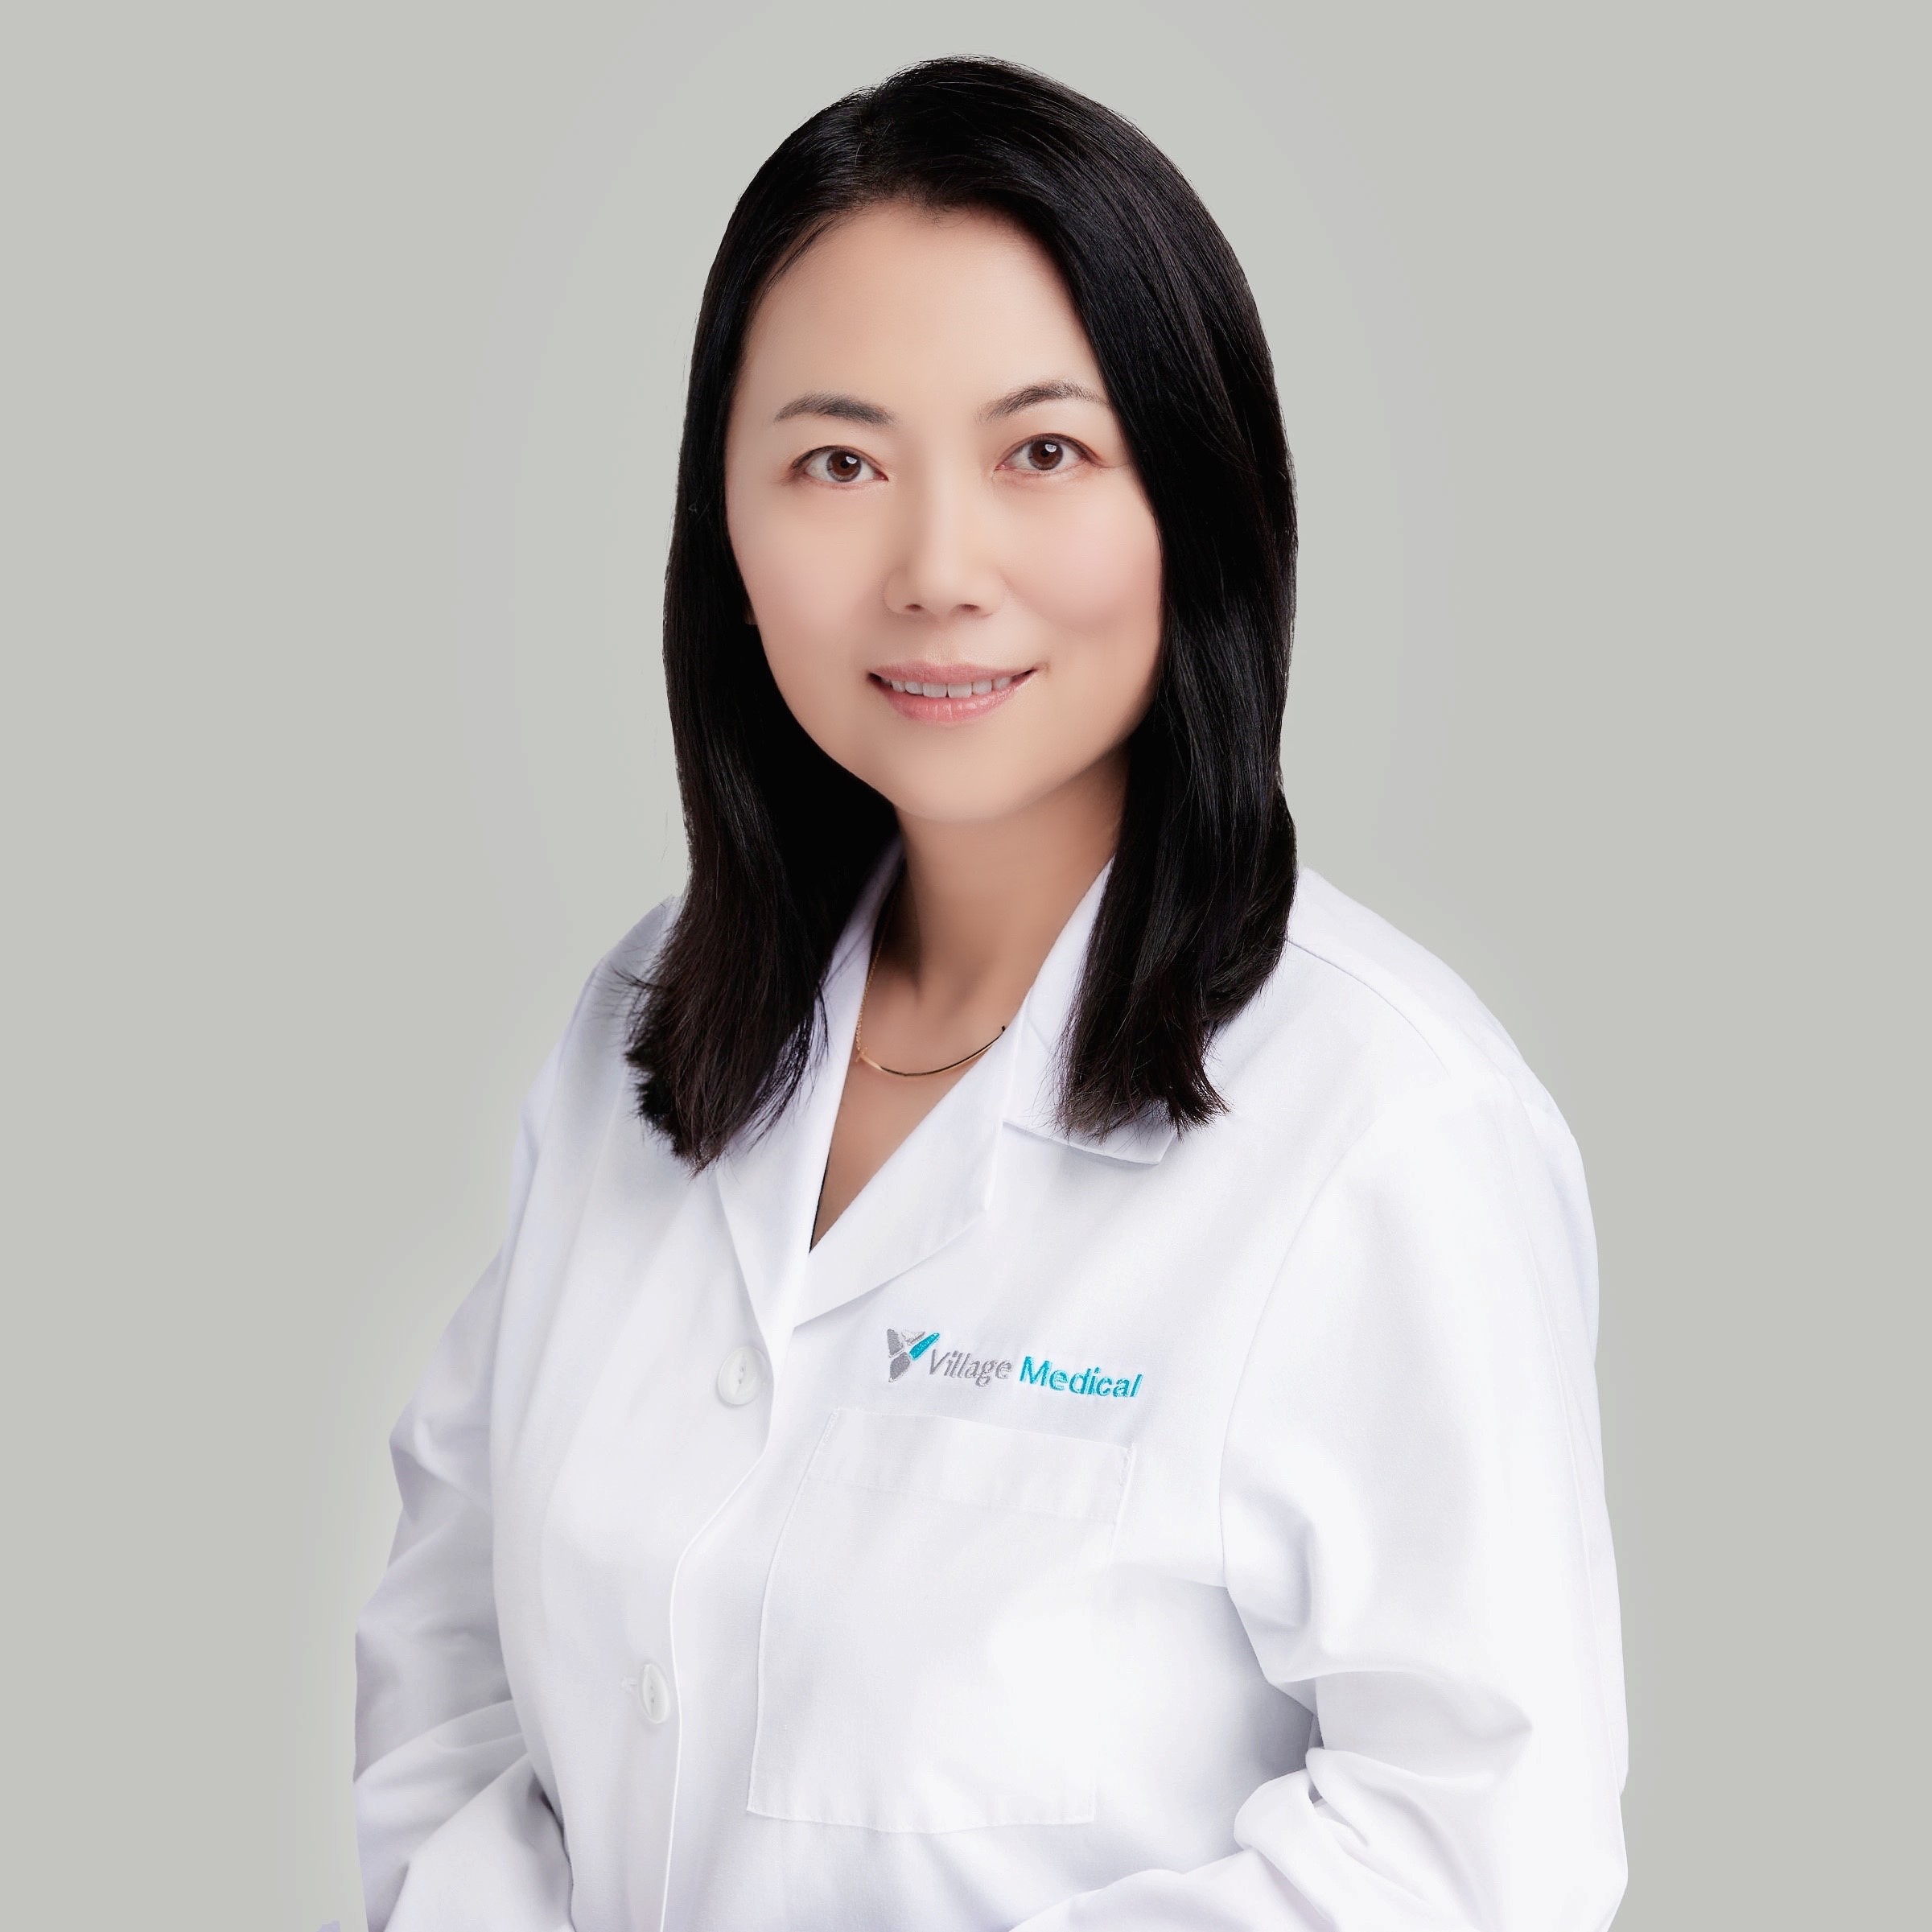 Professional headshot of Wen Yang, MD